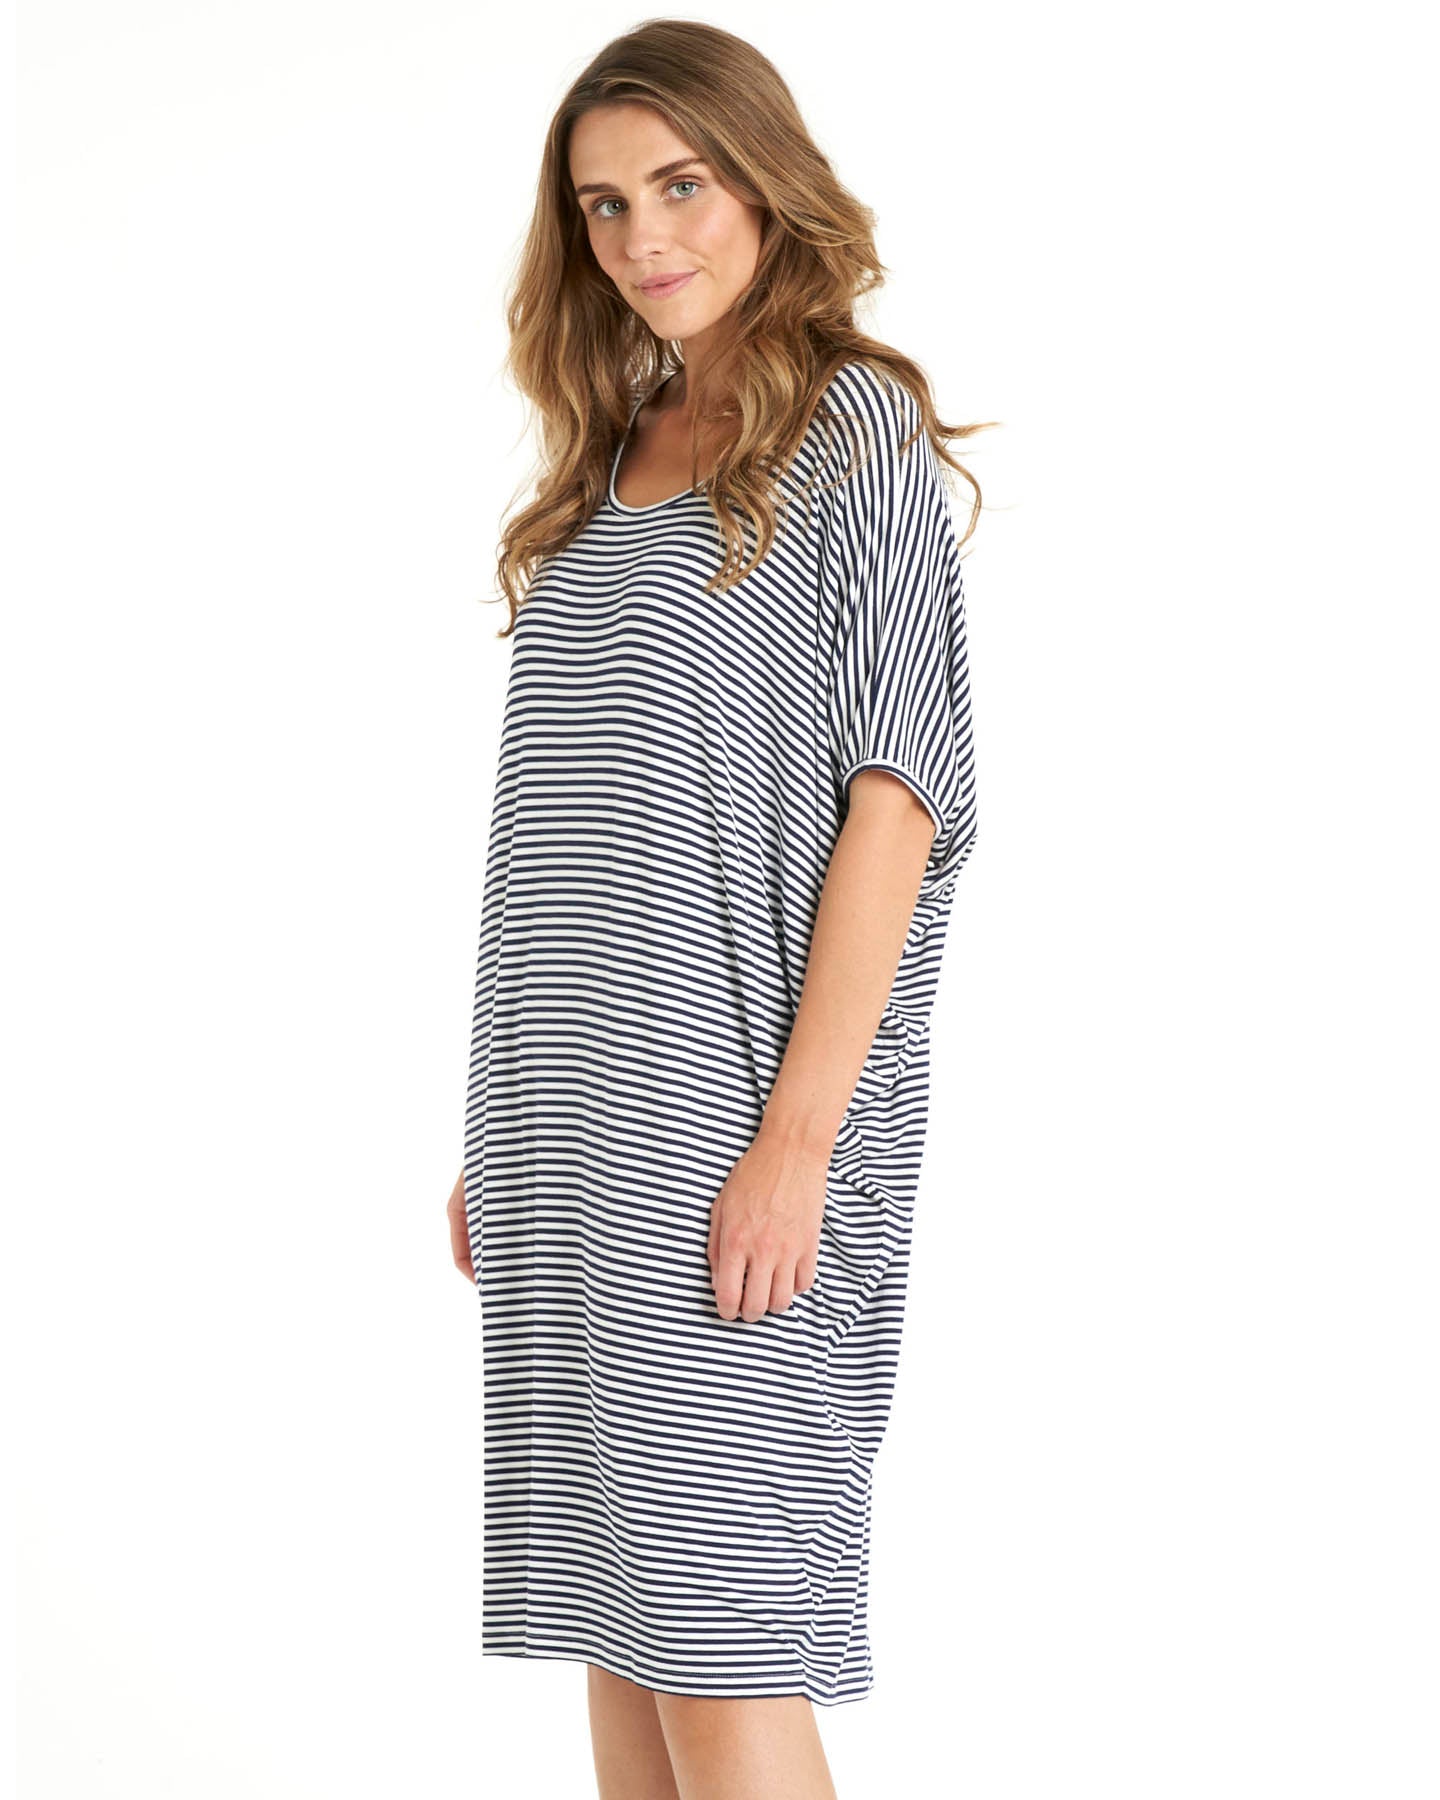 Maui Relaxed Draped Knee-Length T-Shirt Dress - Navy Blue/White Stripe